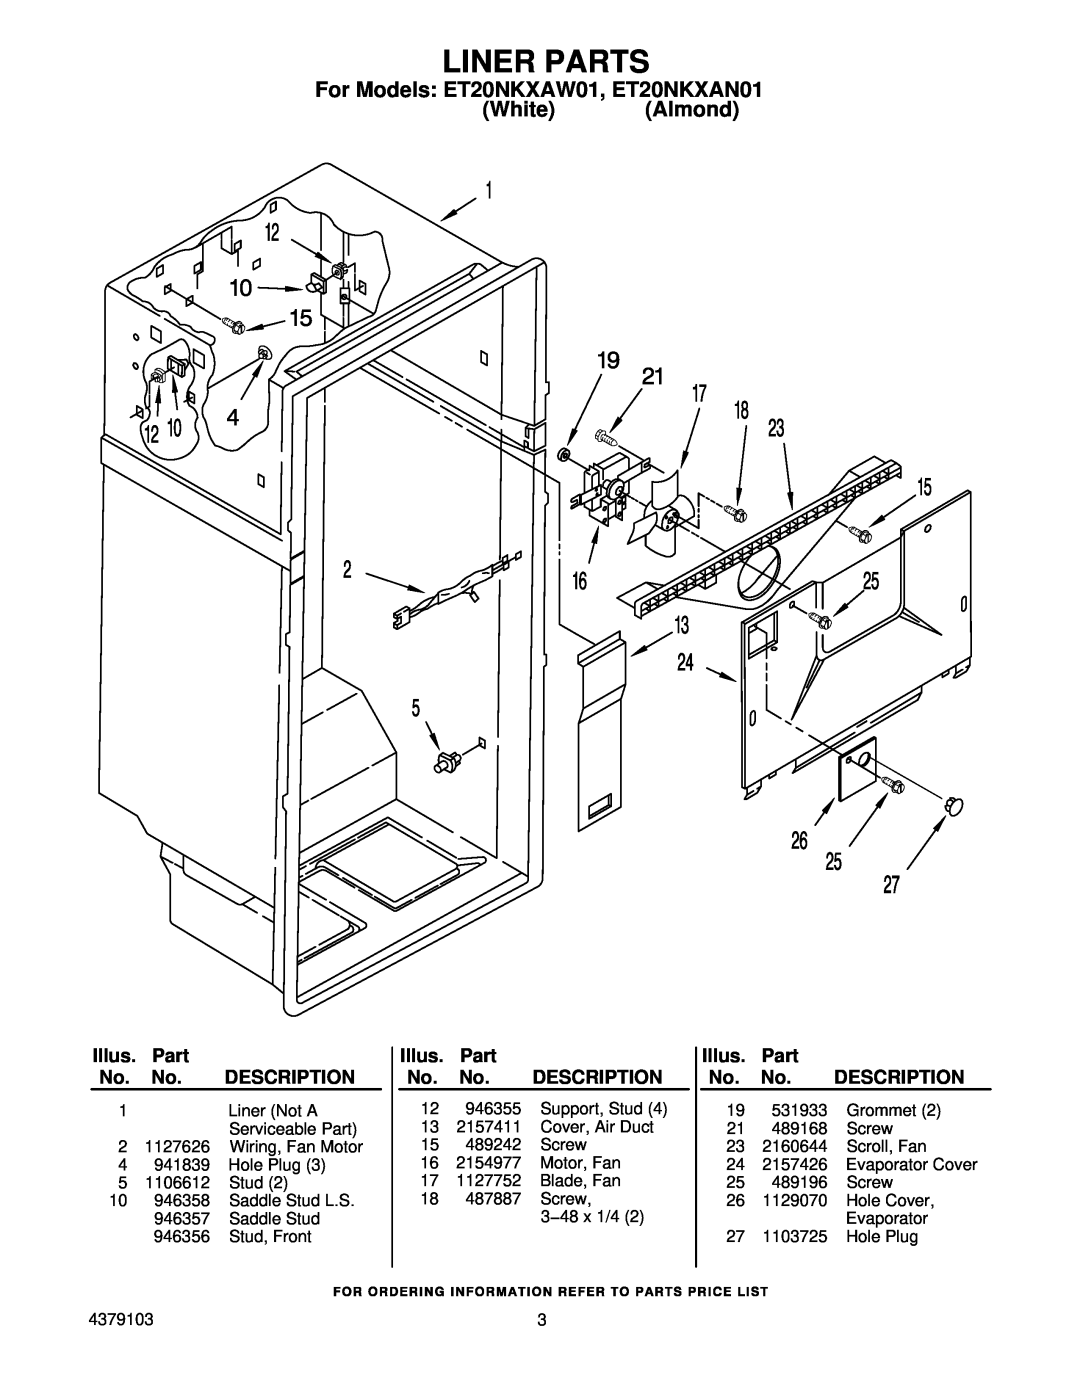 Whirlpool manual Liner Parts, Illus, Description, For Models ET20NKXAW01, ET20NKXAN01 White Almond 